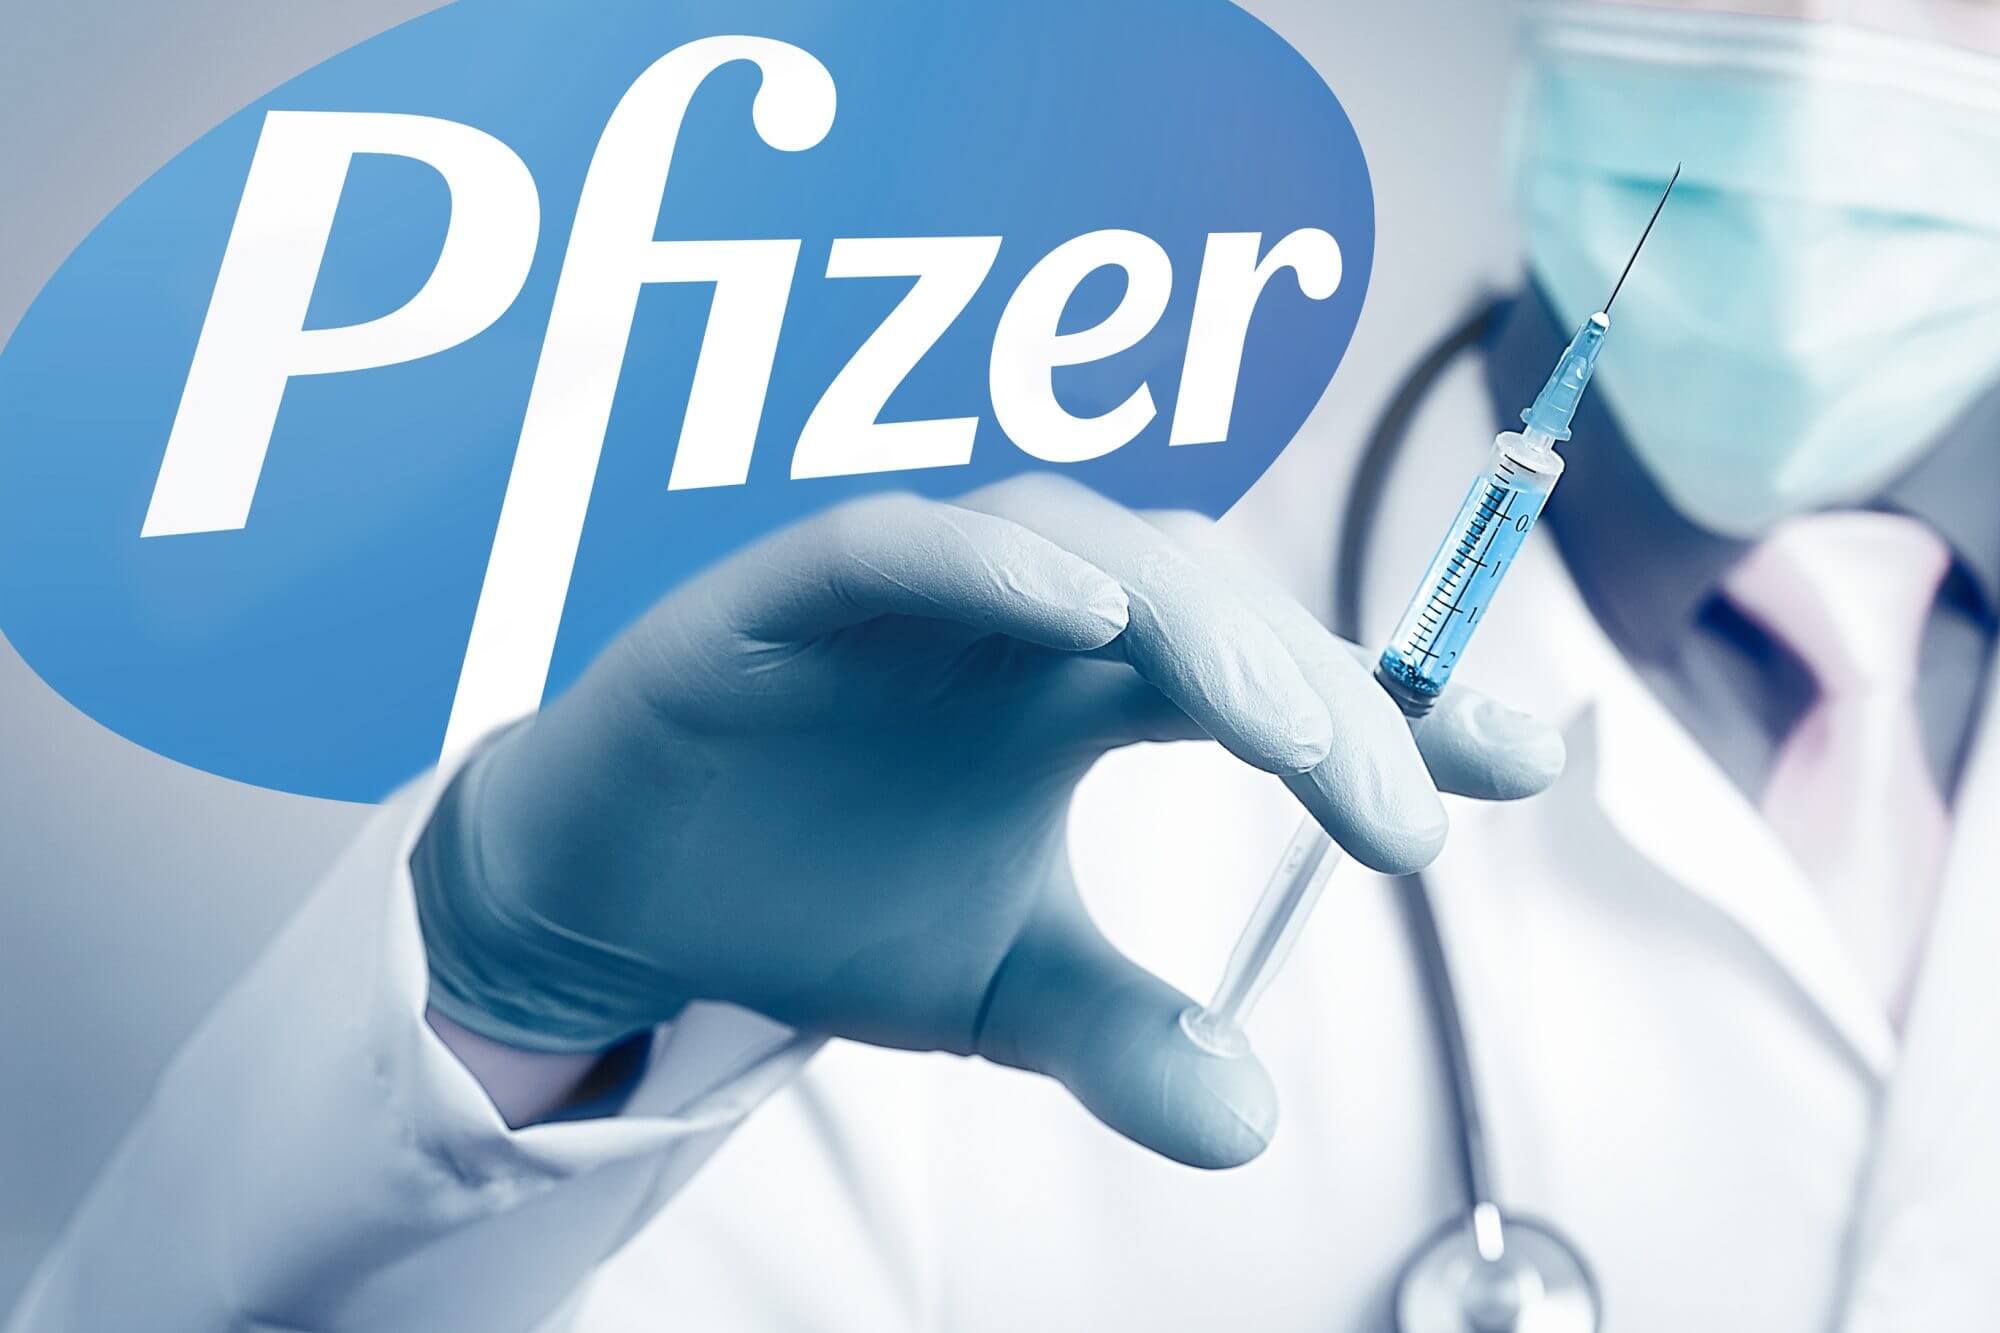 Пфизер позива лекаре да зауставе употребу виталниһ антибиотика: Ево зашто